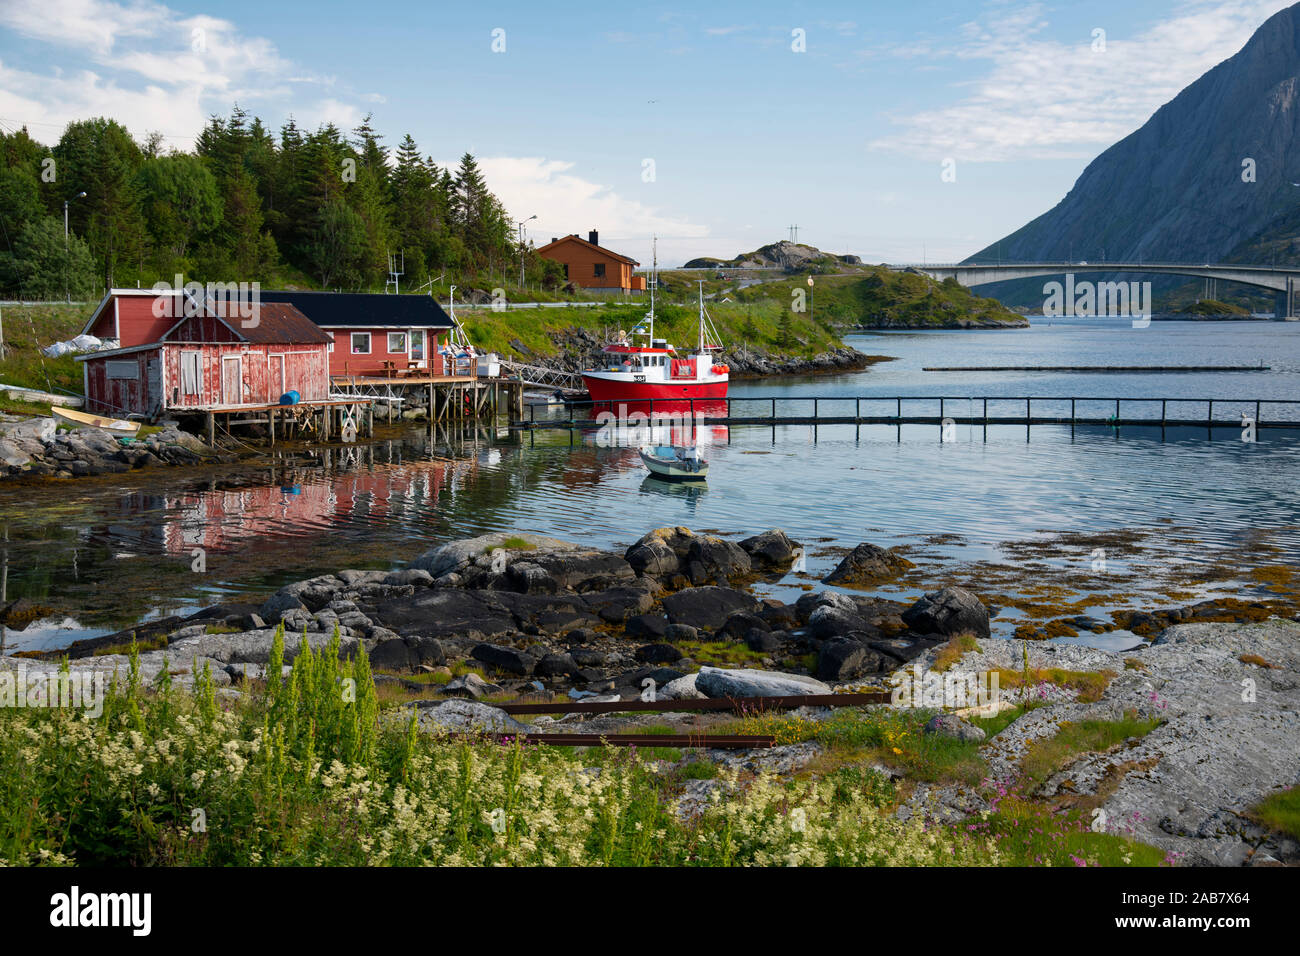 A fishing boat and dock houses near Kakern Bridge, Ramberg, Lofoten Islands, Norway, Europe Stock Photo